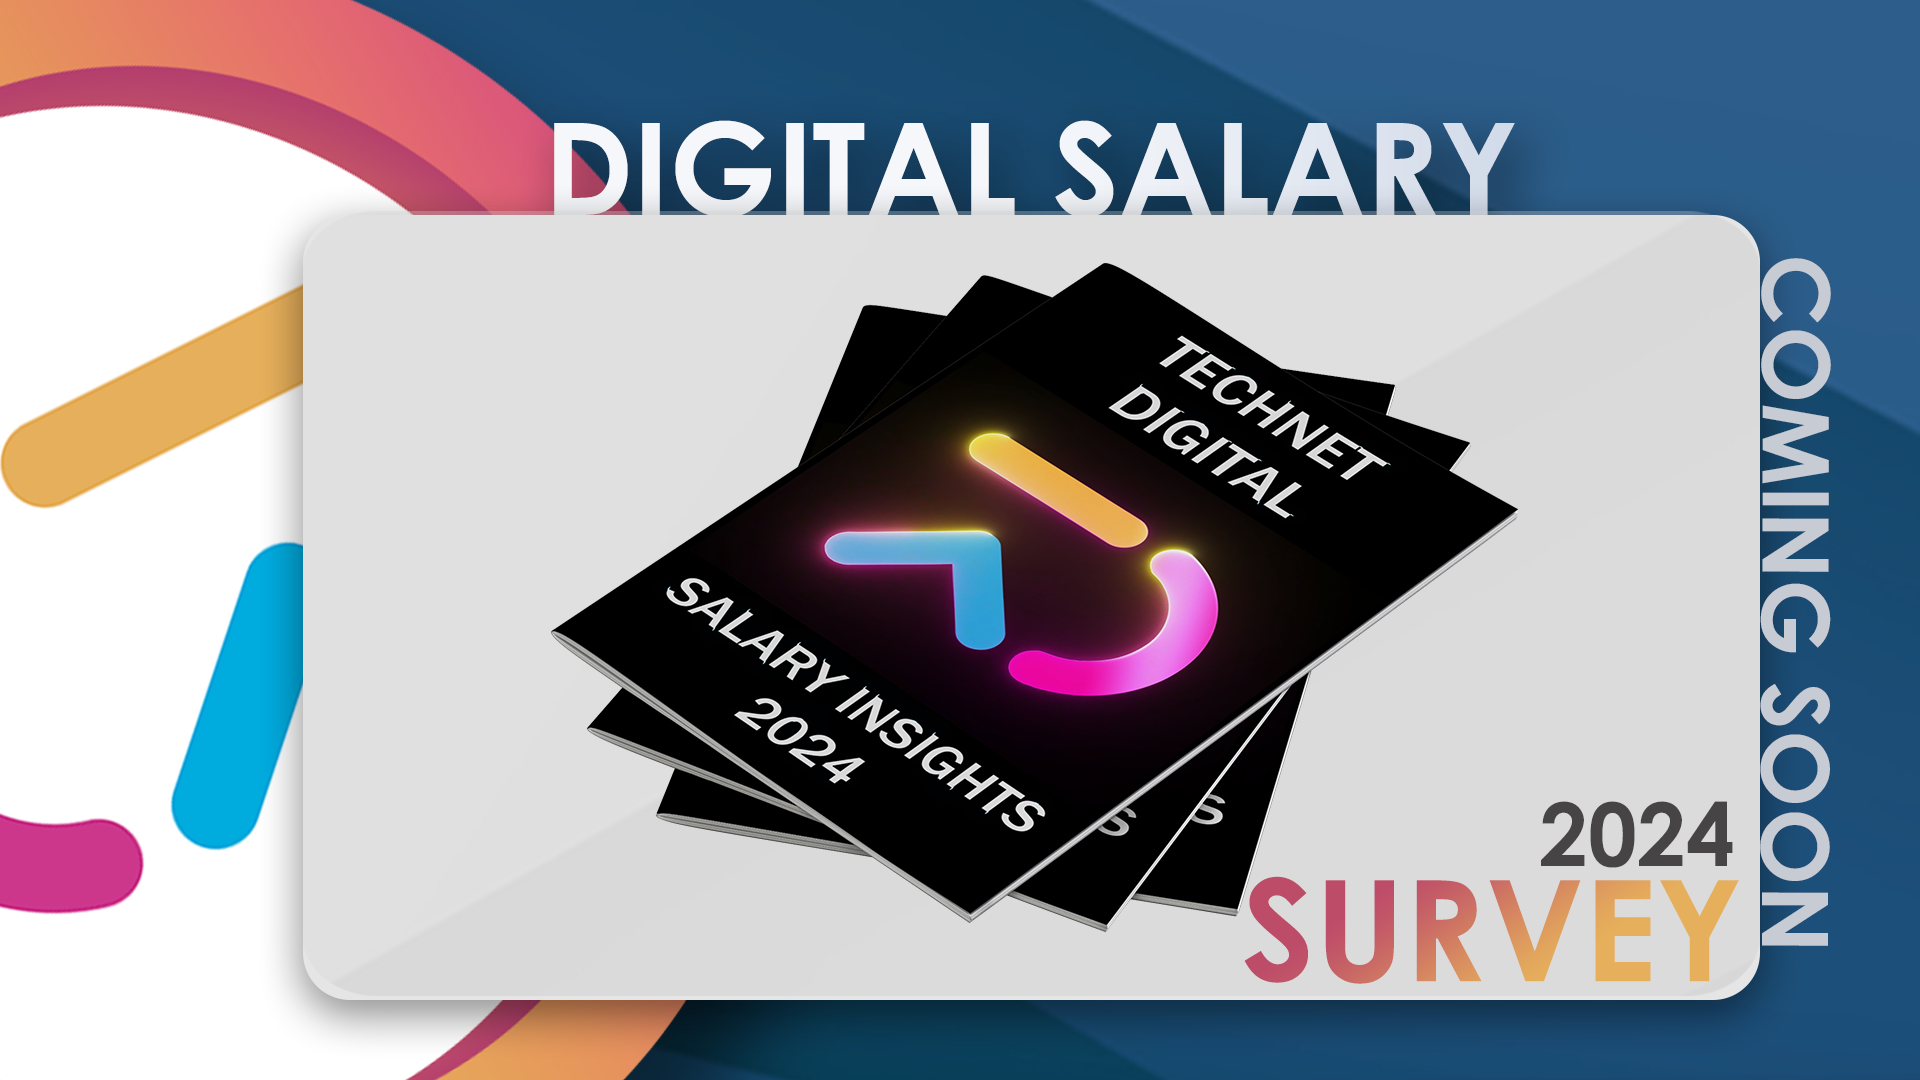 Digital Salary Survey 2024 coming soon